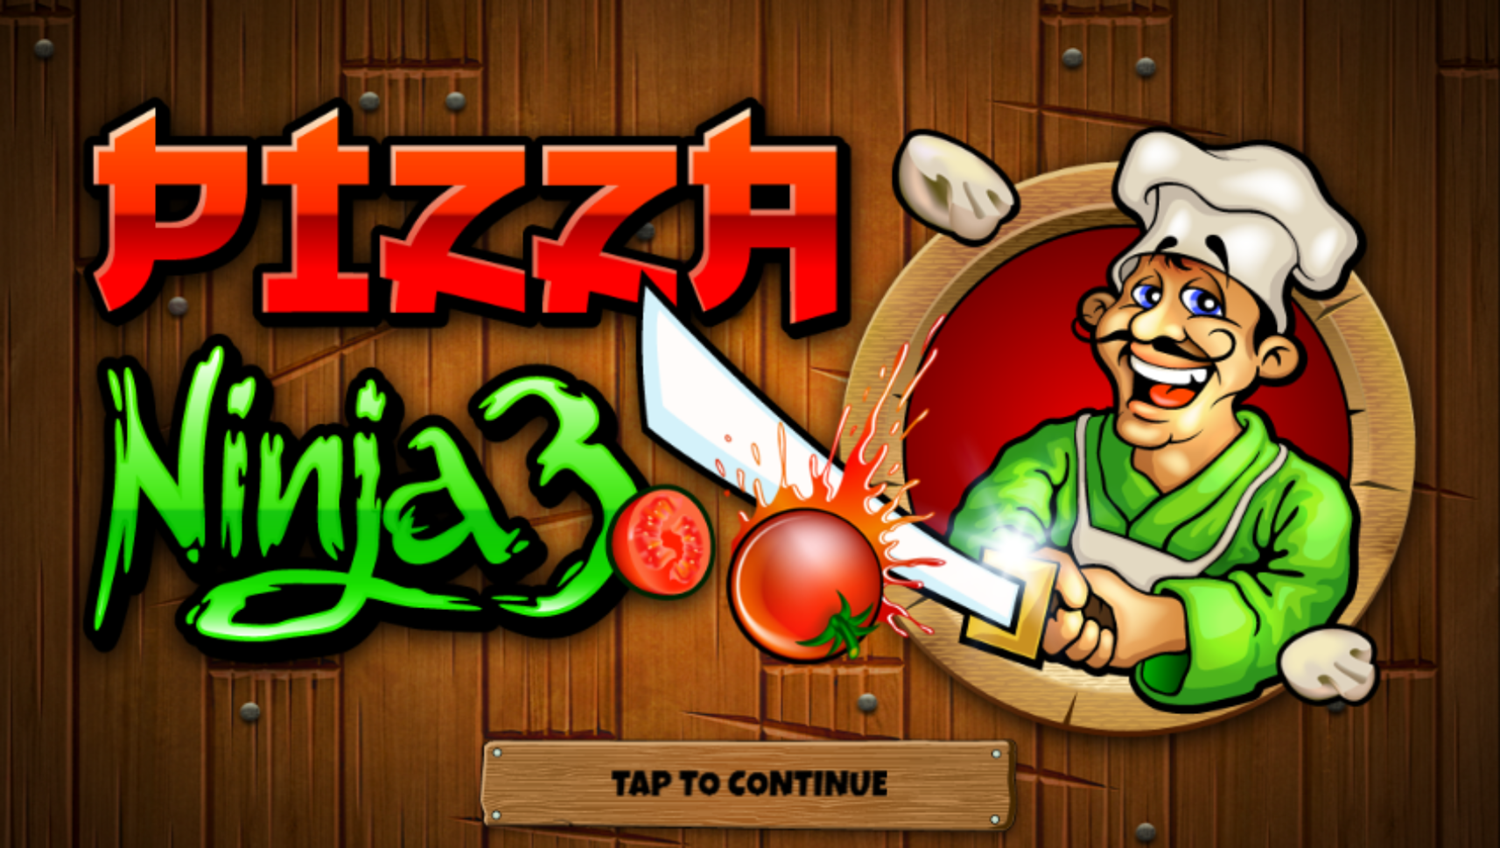 Pizza Ninja 3 Game Welcome Screen Screenshot.